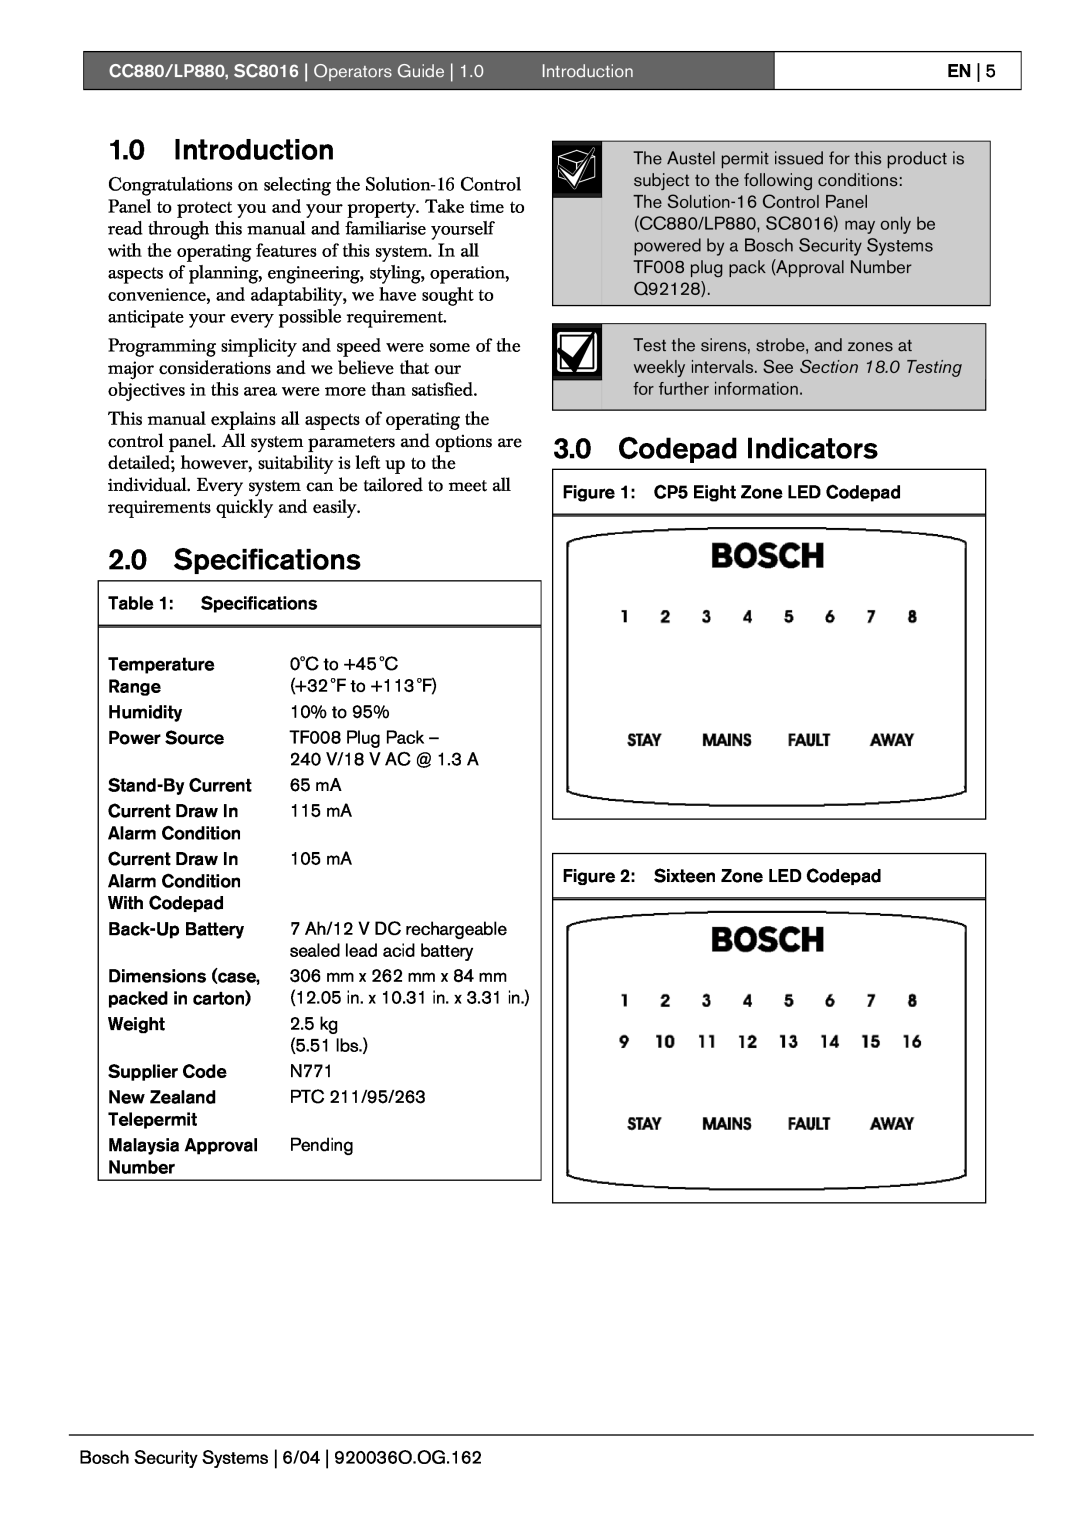 Bosch Appliances manual Introduction, Specifications, Codepad Indicators, CC880/LP880, SC8016 Operators Guide 